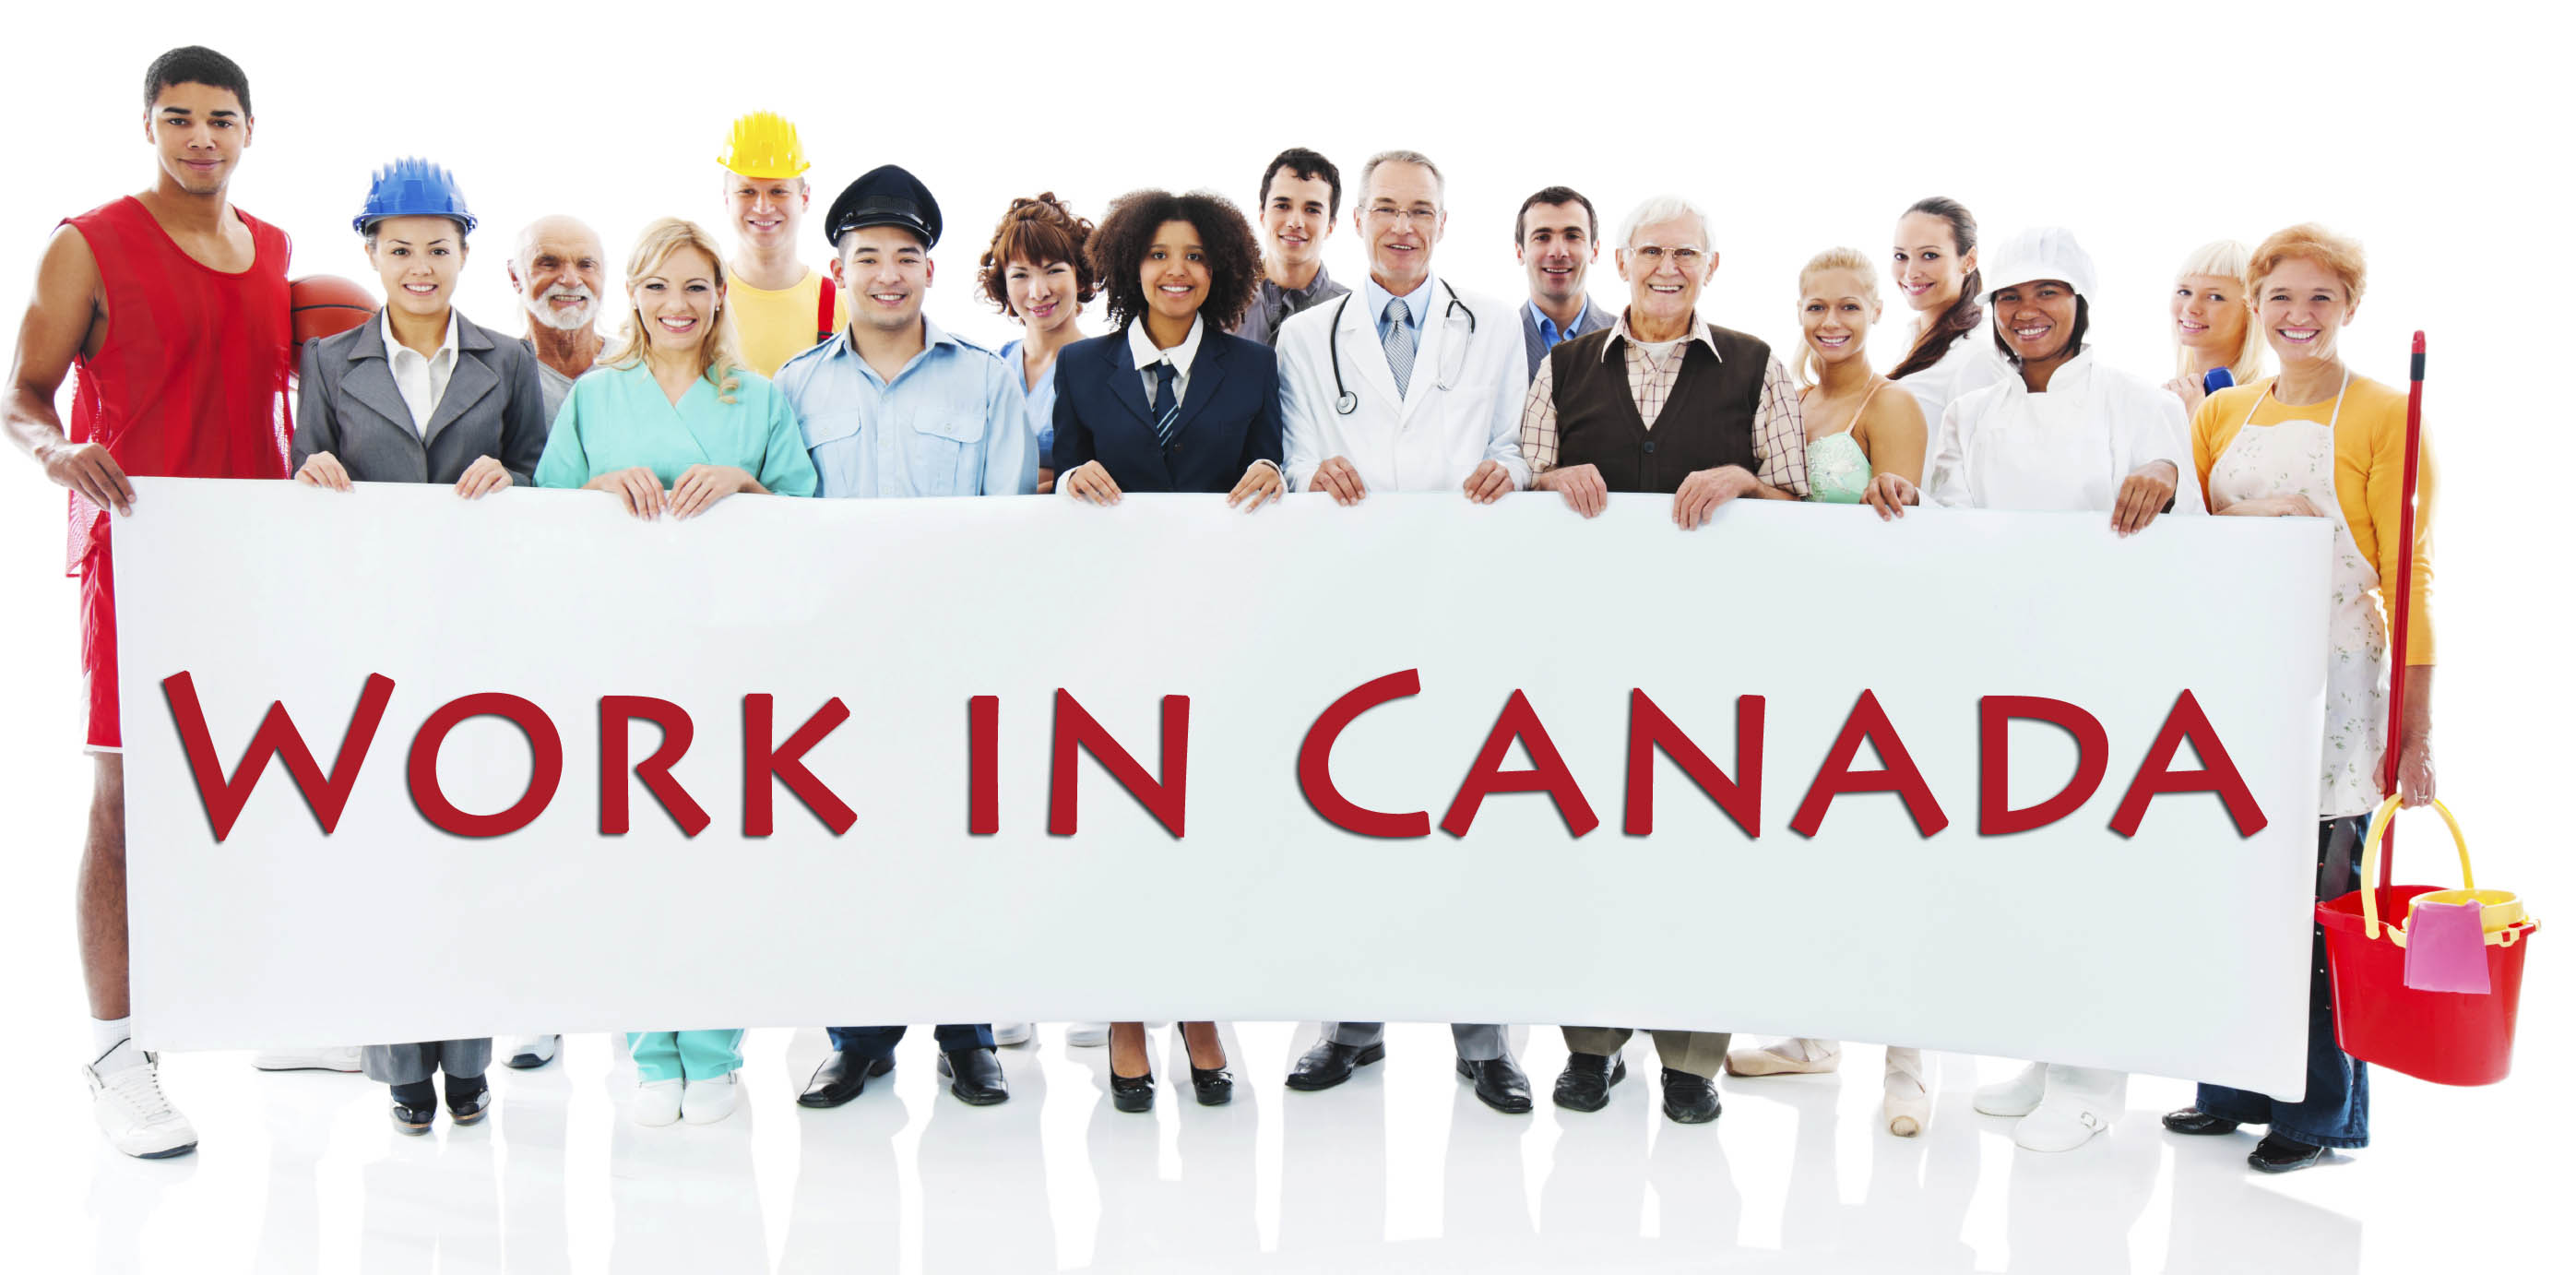 WORK-IN-CANADA-pic.jpg